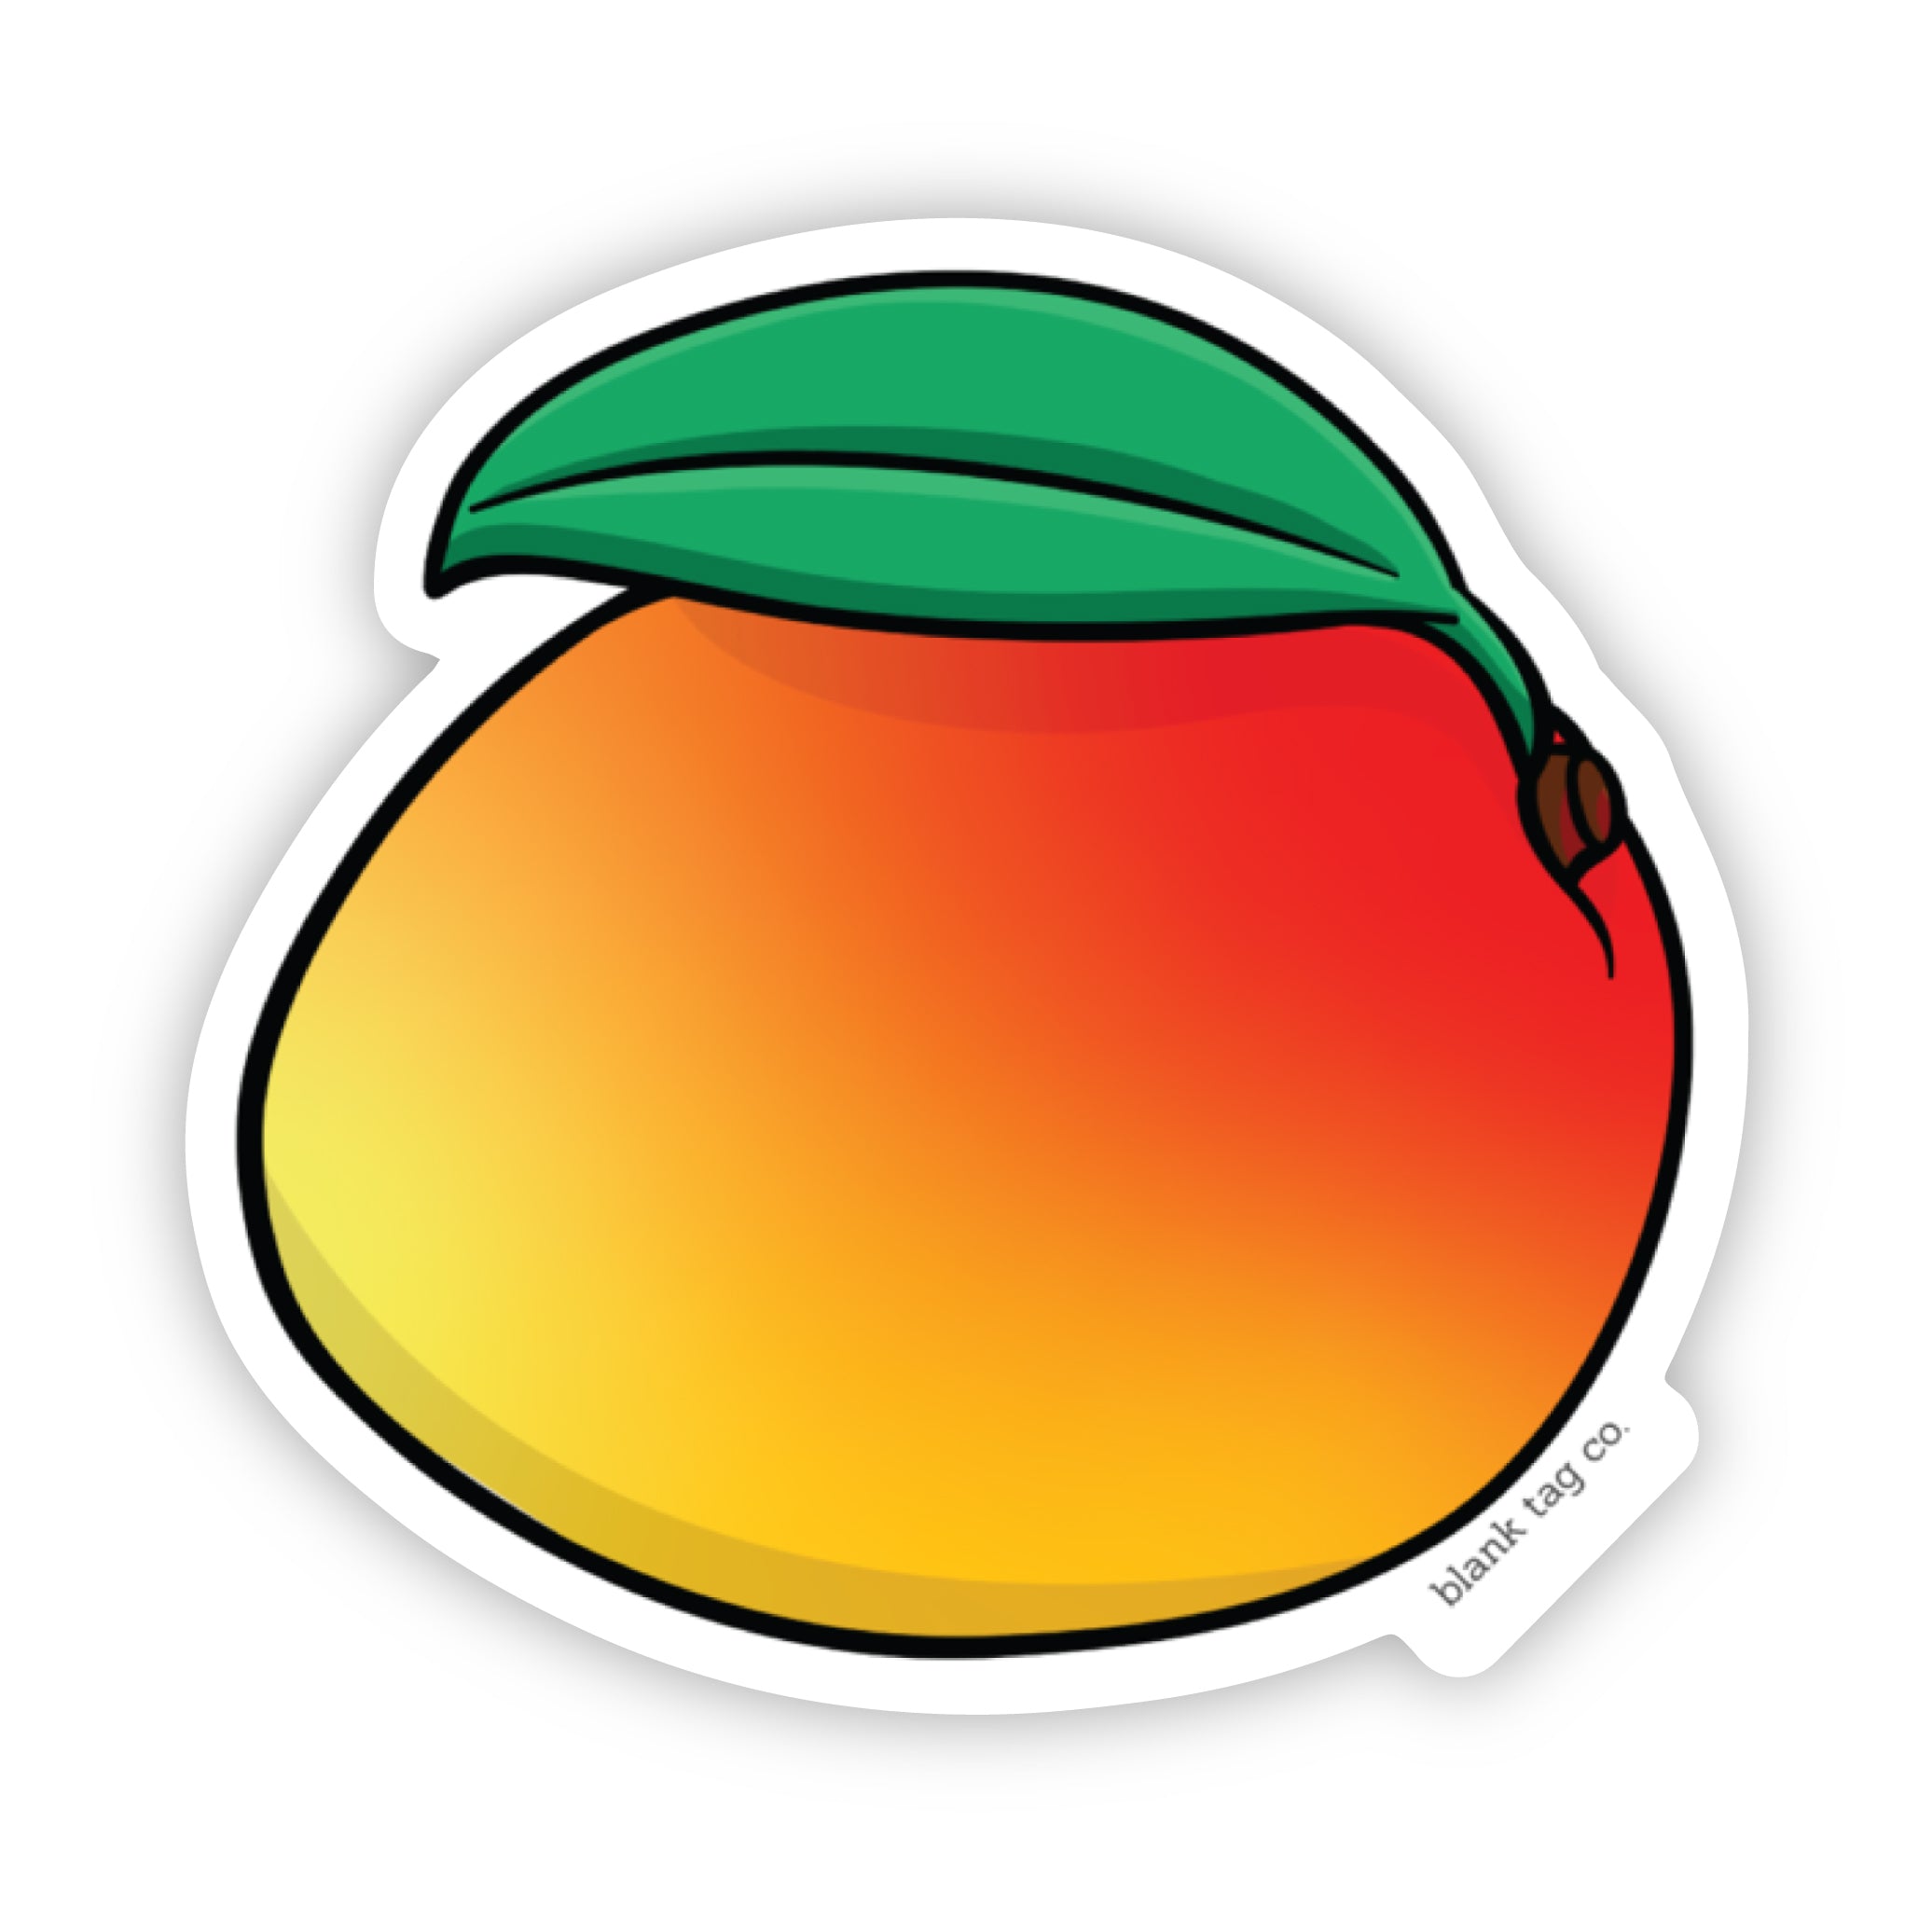 The Mango Sticker